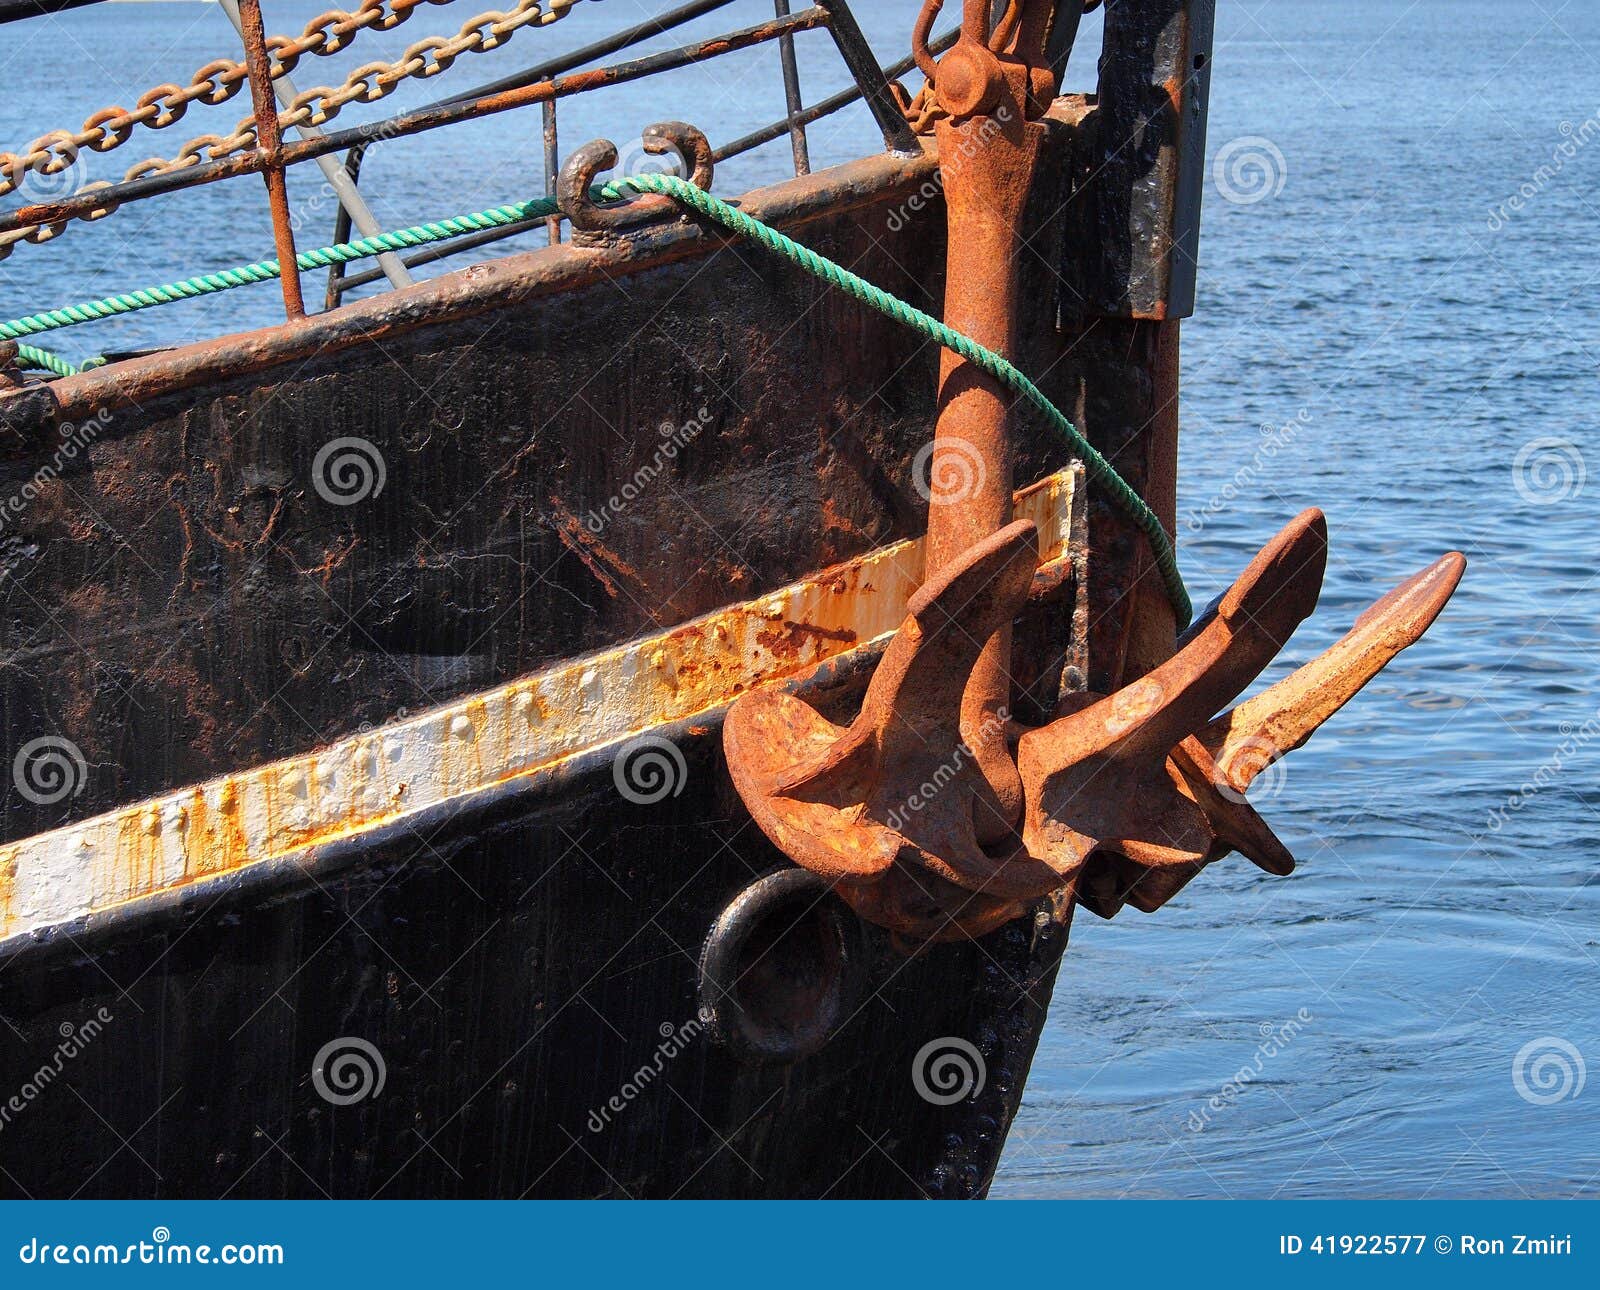 https://thumbs.dreamstime.com/z/heavy-ship-boat-anchor-marine-metal-marine-boating-transportation-background-image-41922577.jpg